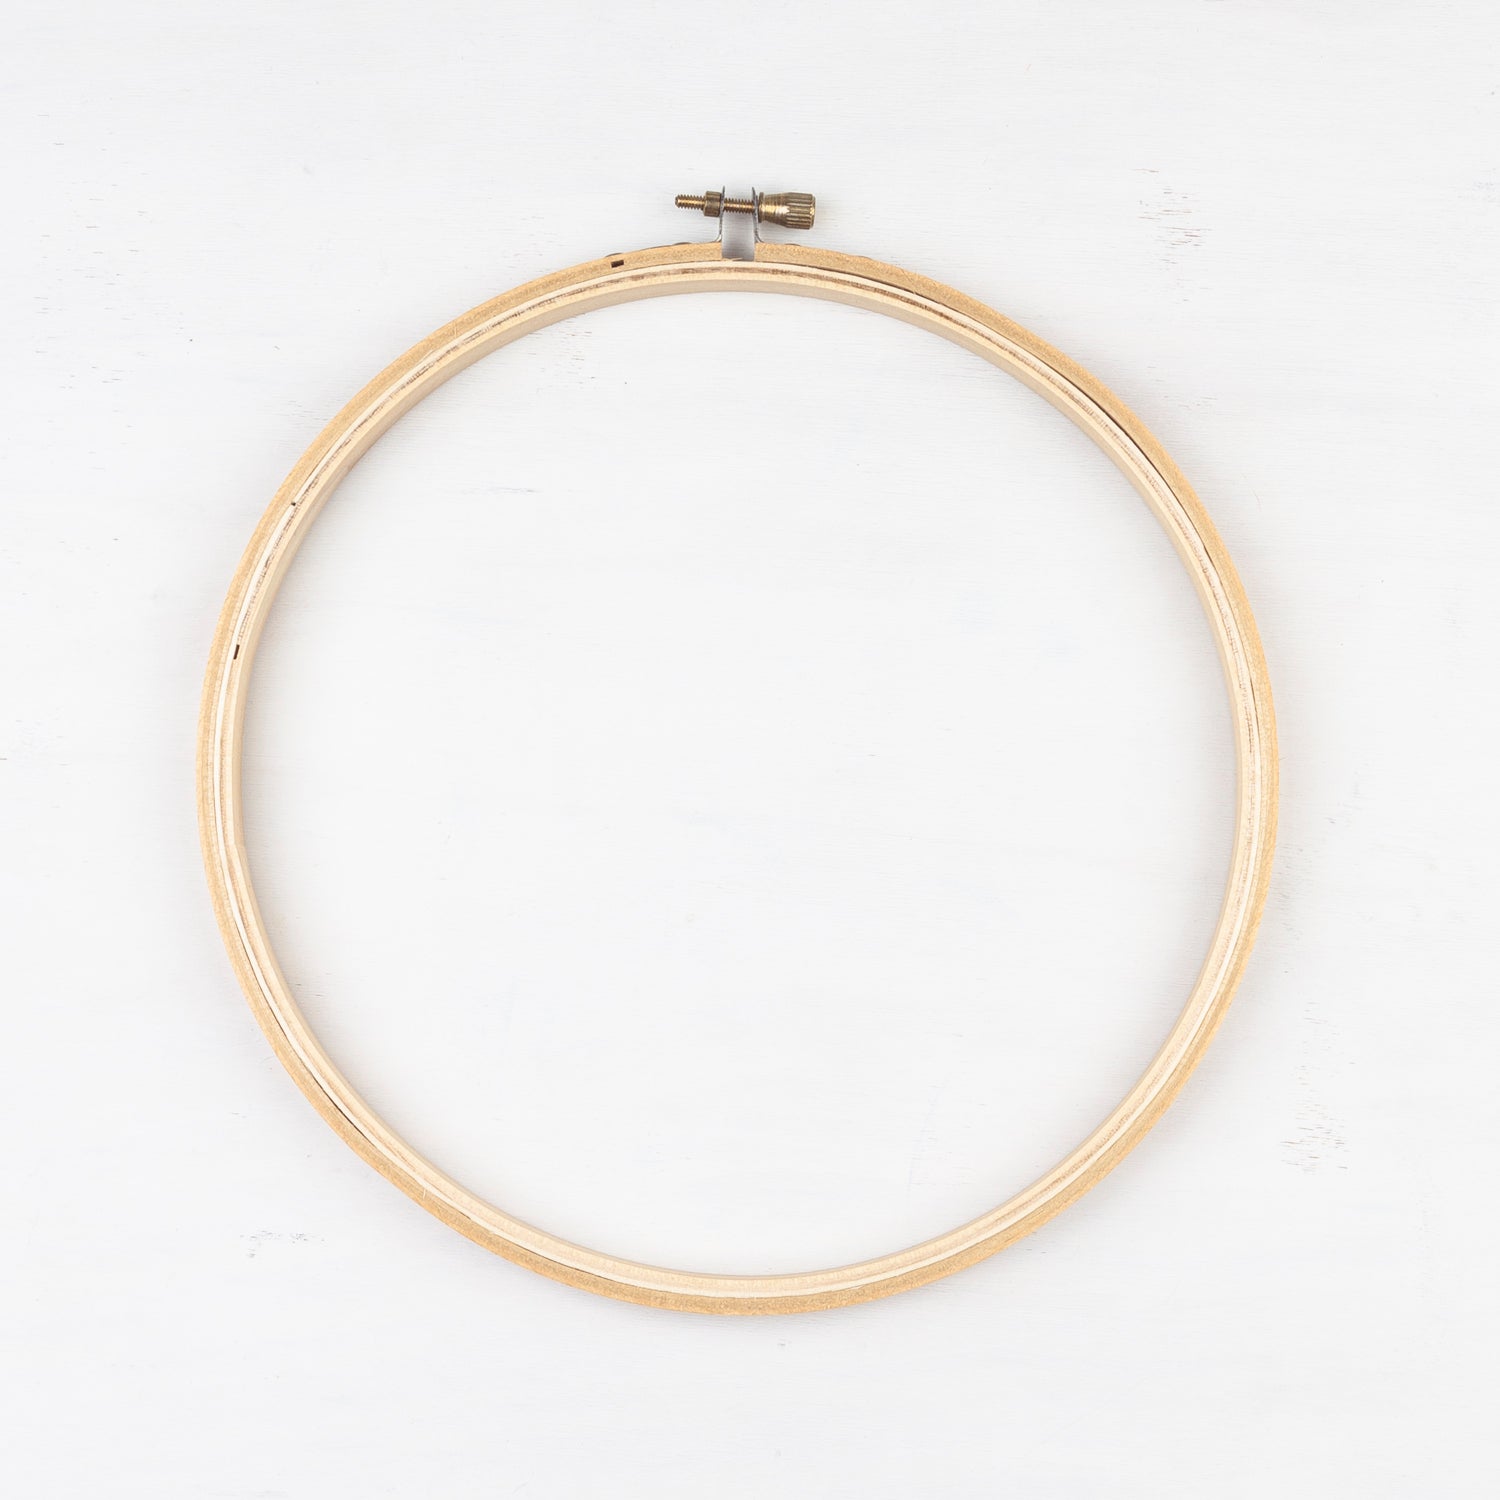 8-Inch Wood Embroidery Hoop